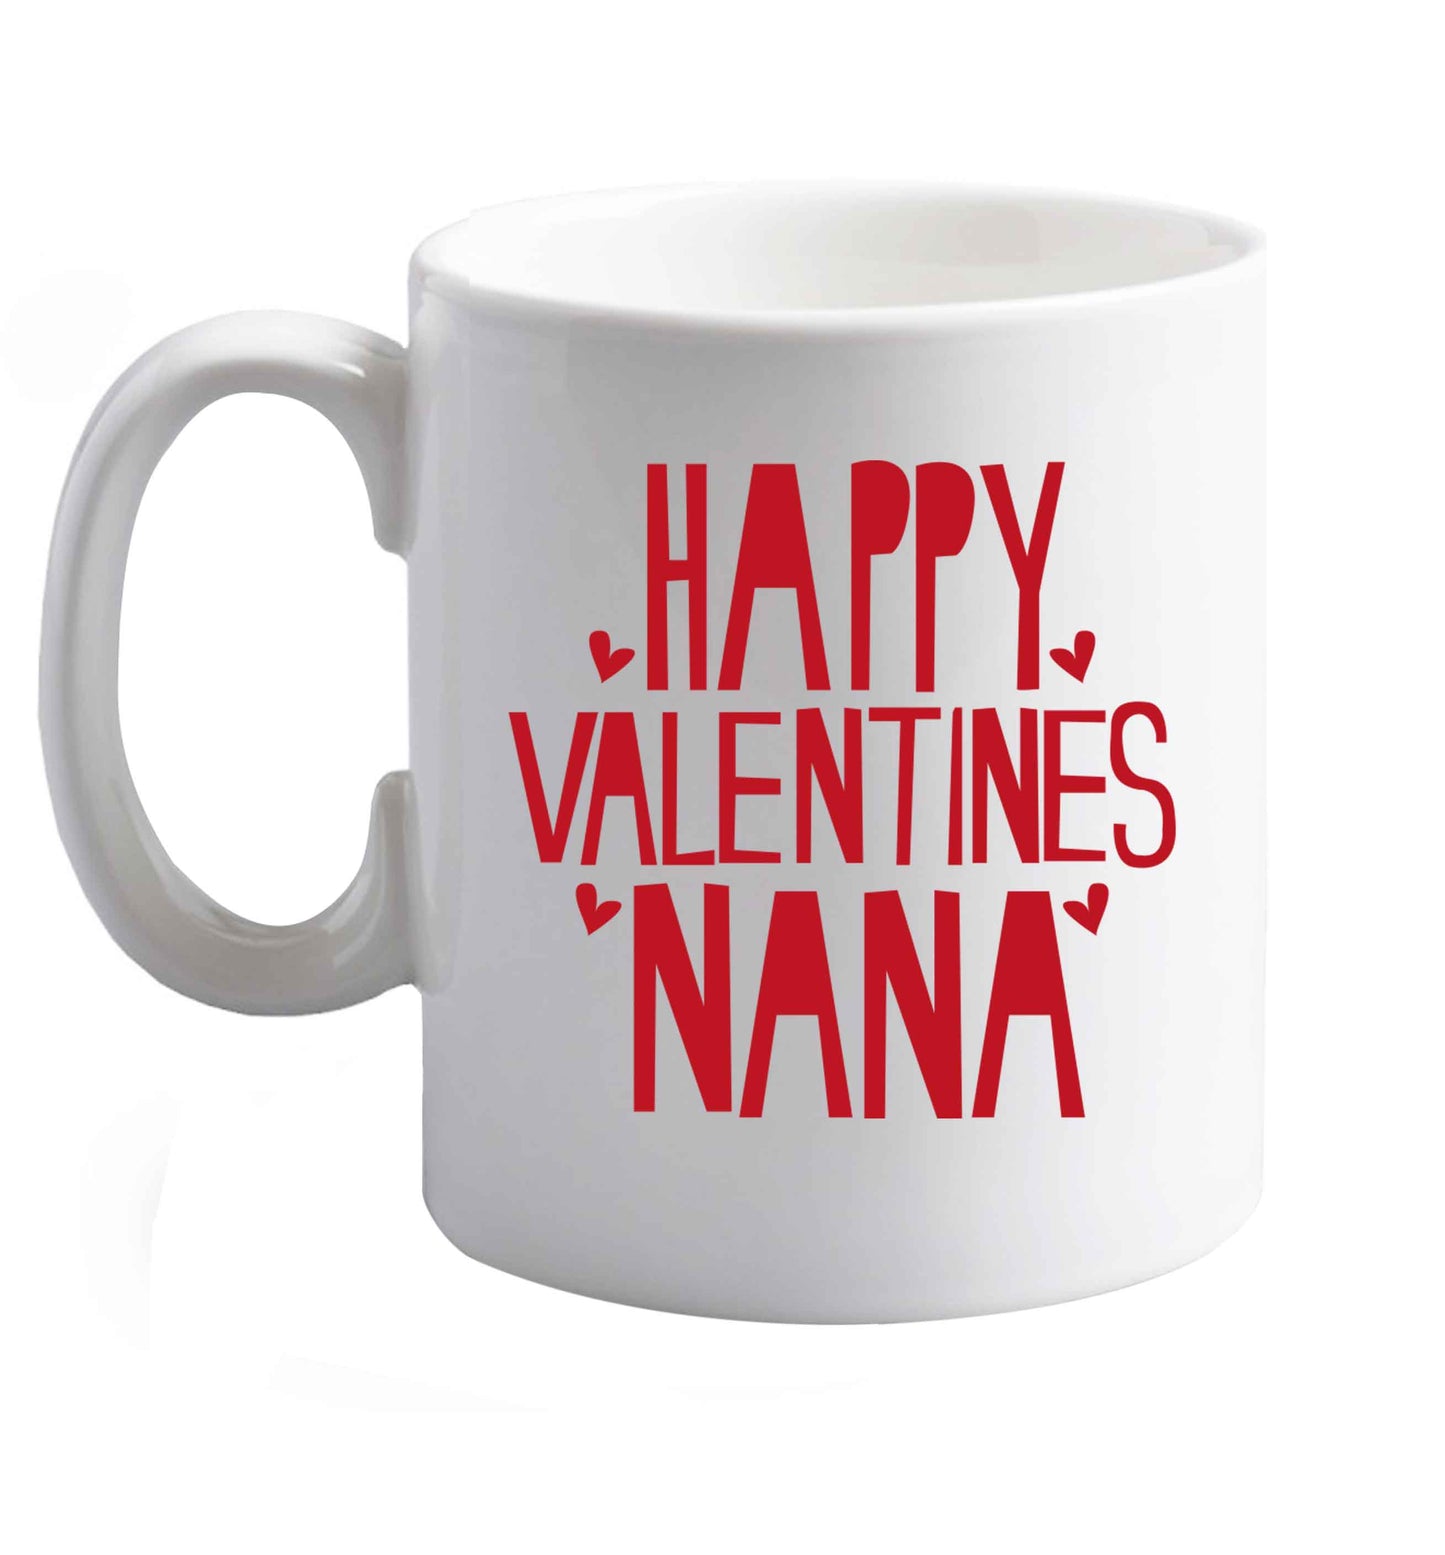 10 oz Happy valentines nana ceramic mug right handed